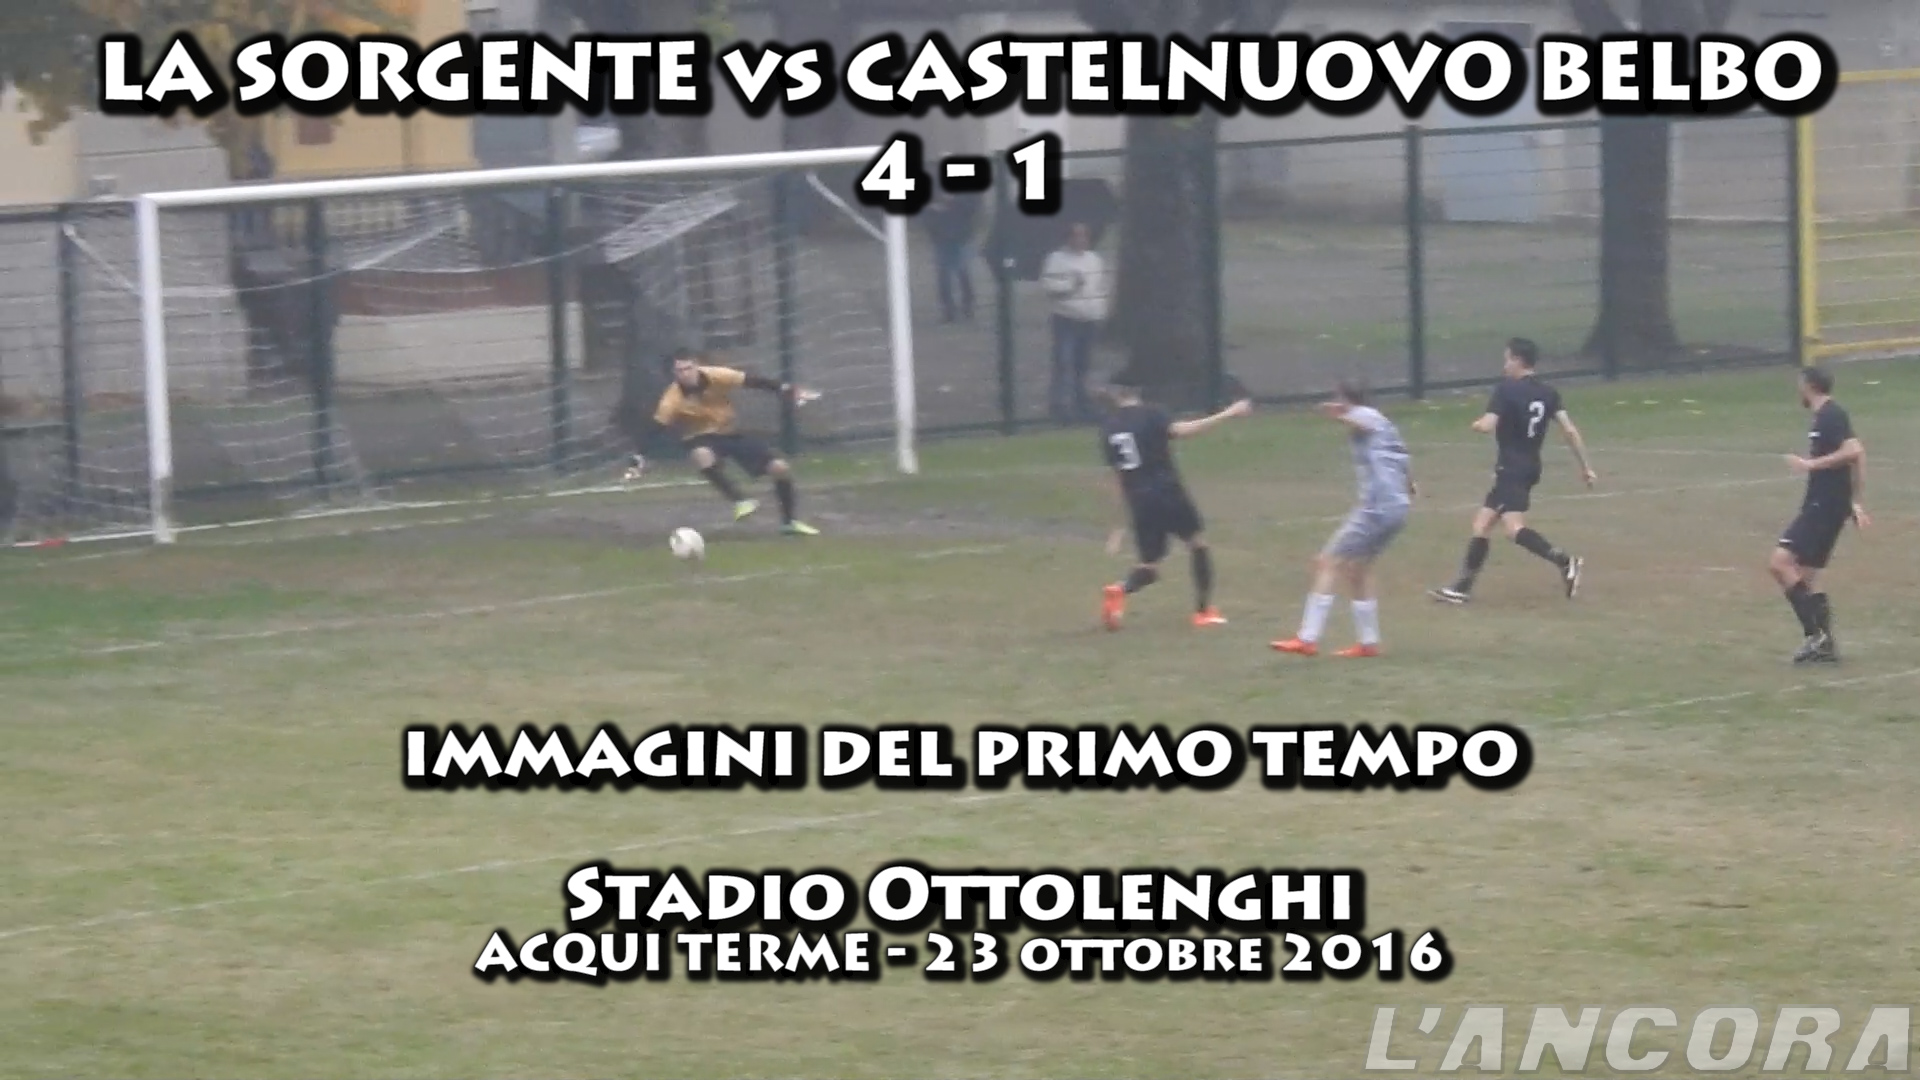 La Sorgente vs Castelnuovo Belbo 4 - 1